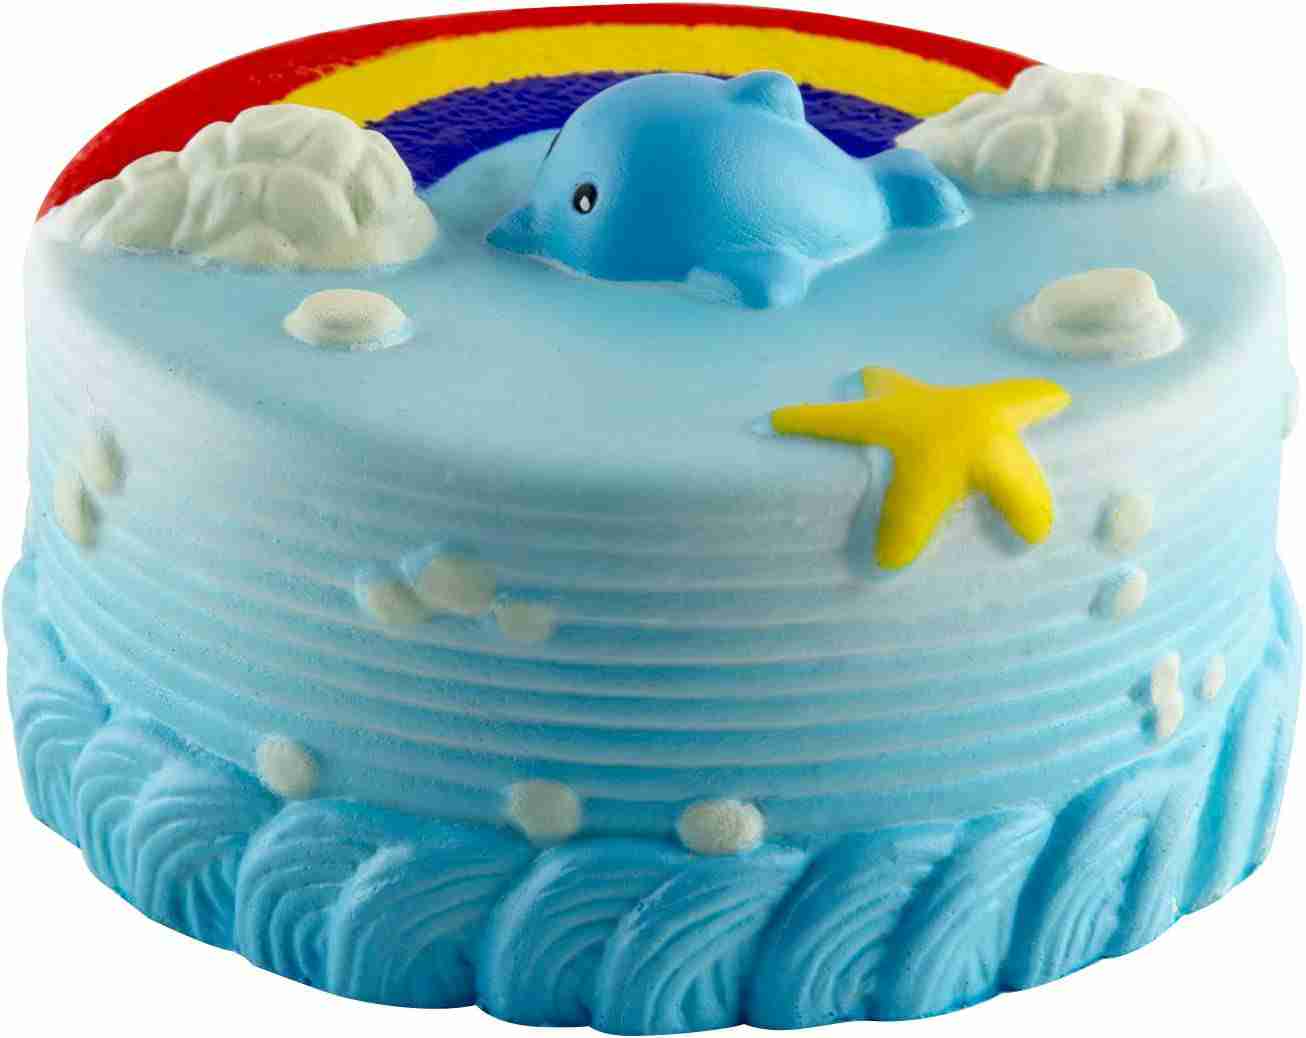 Cool DIY Dolphin Cake